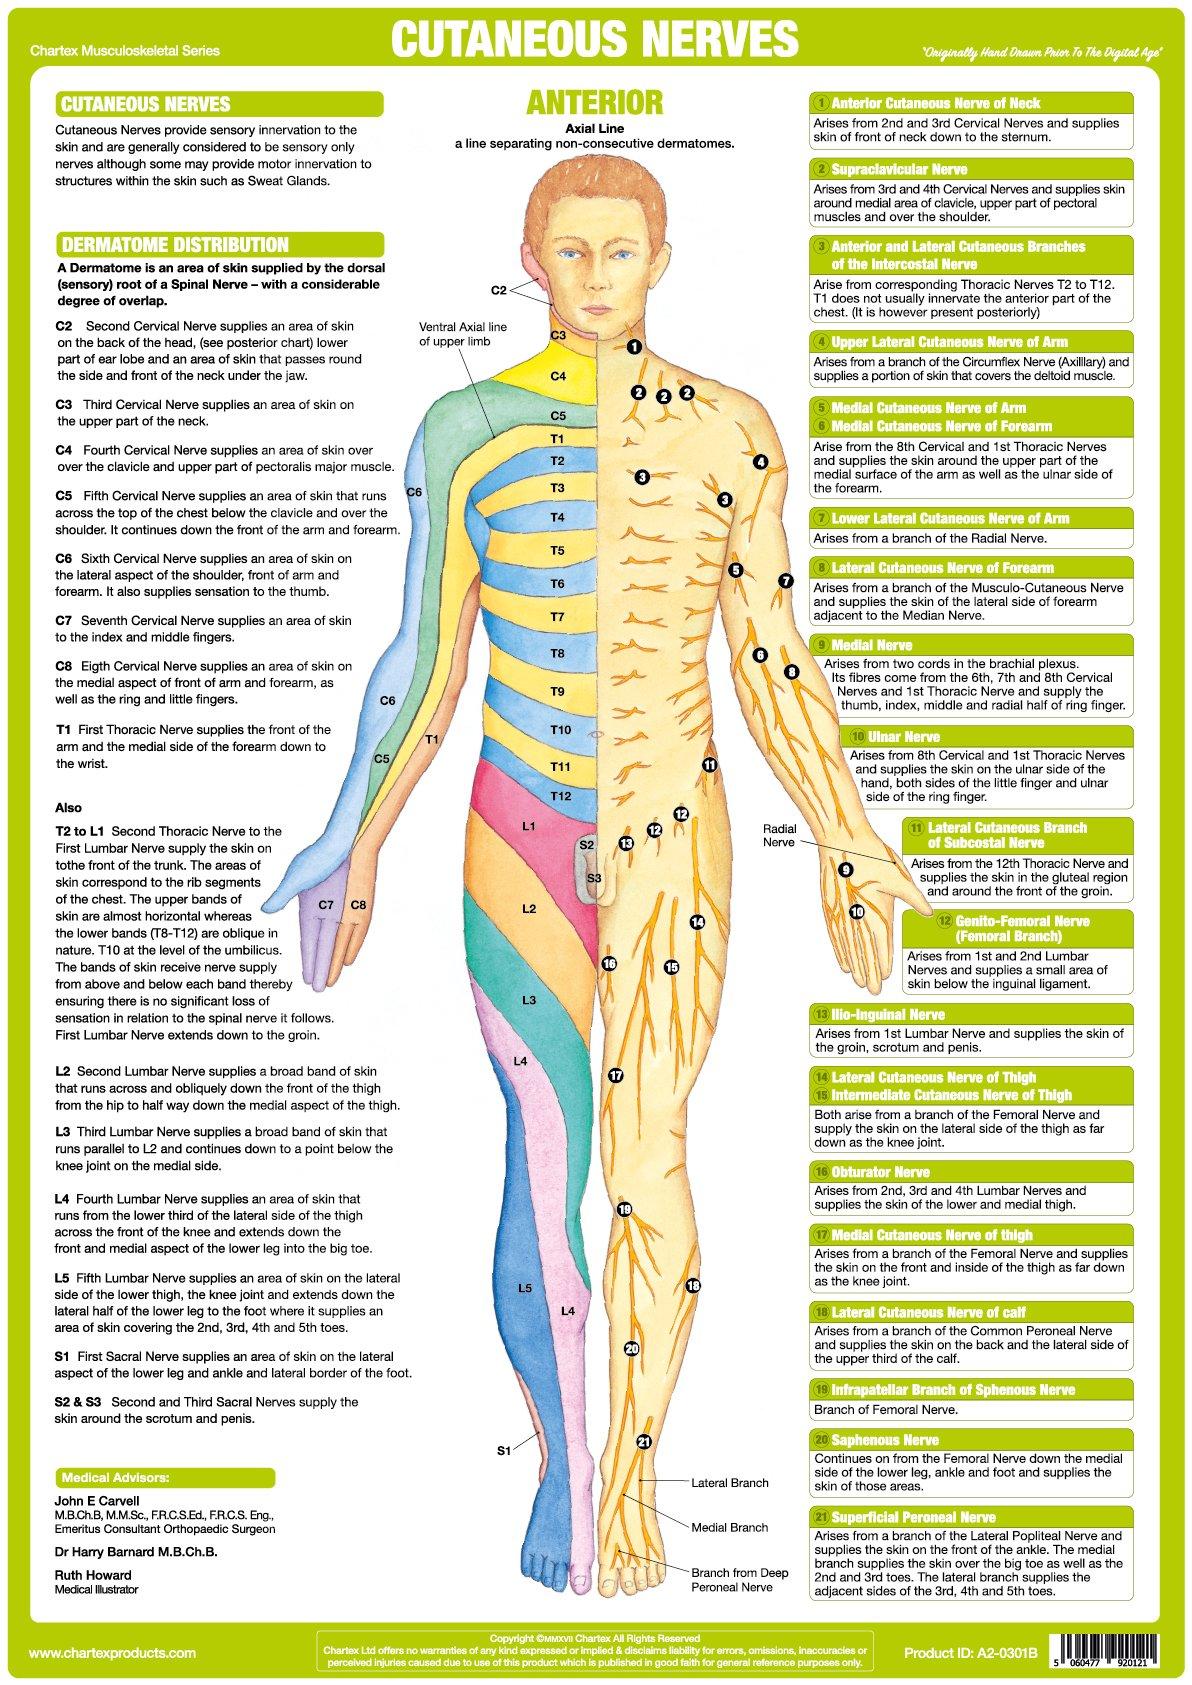 Nerve Anatomy Chart - Cutaneous Anterior